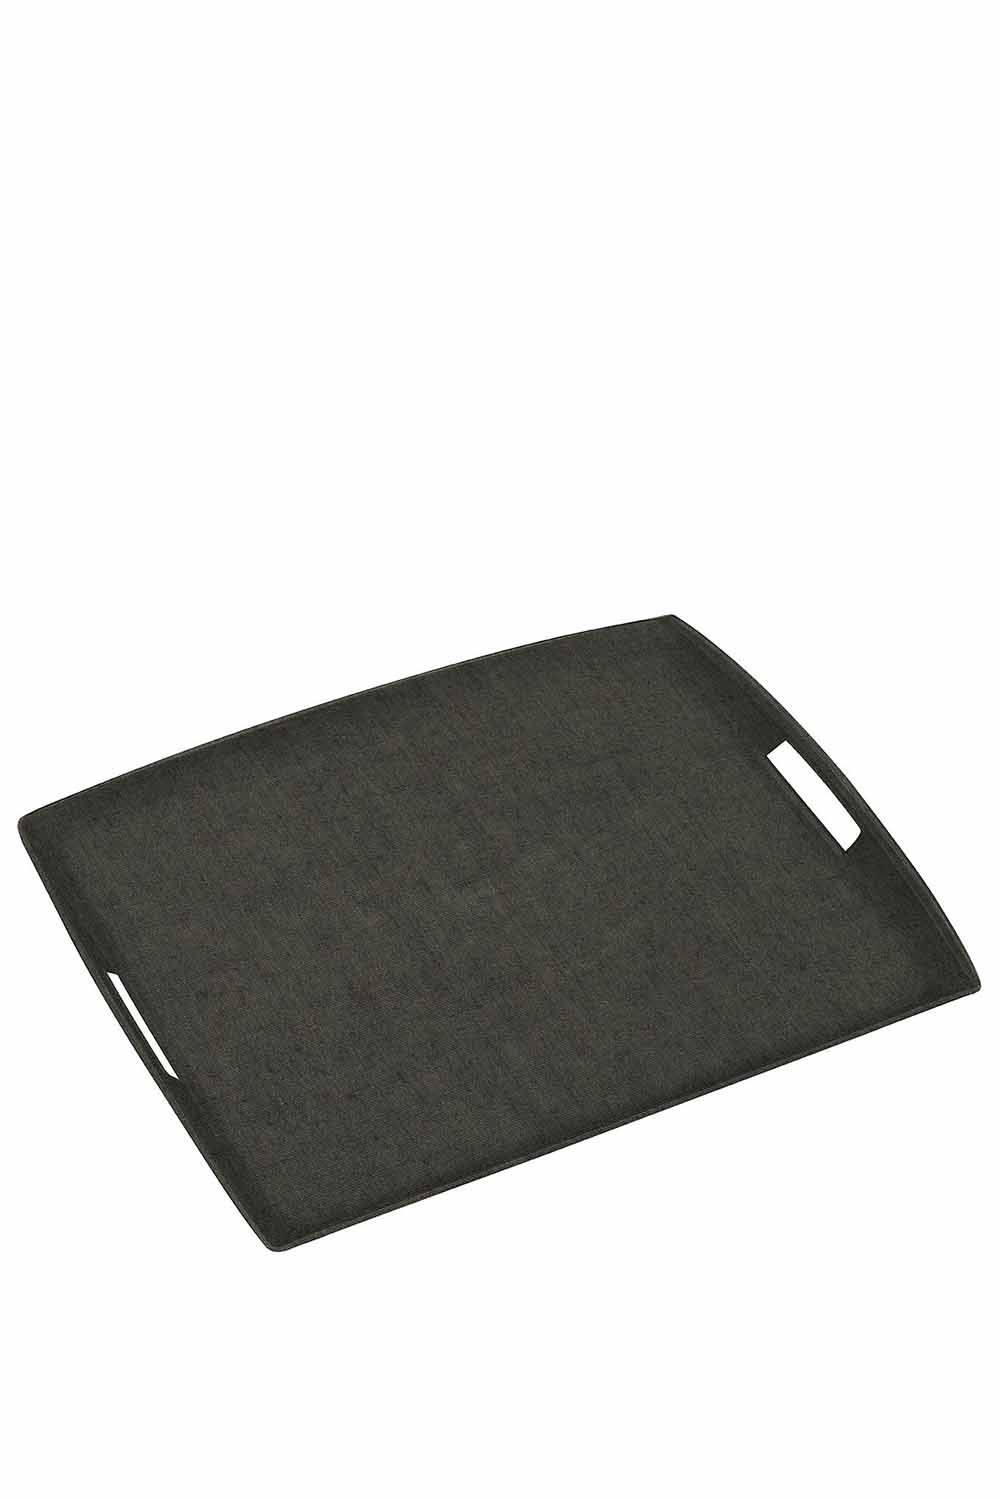 Linen Acrylic Tray, Grey, 54x43cm